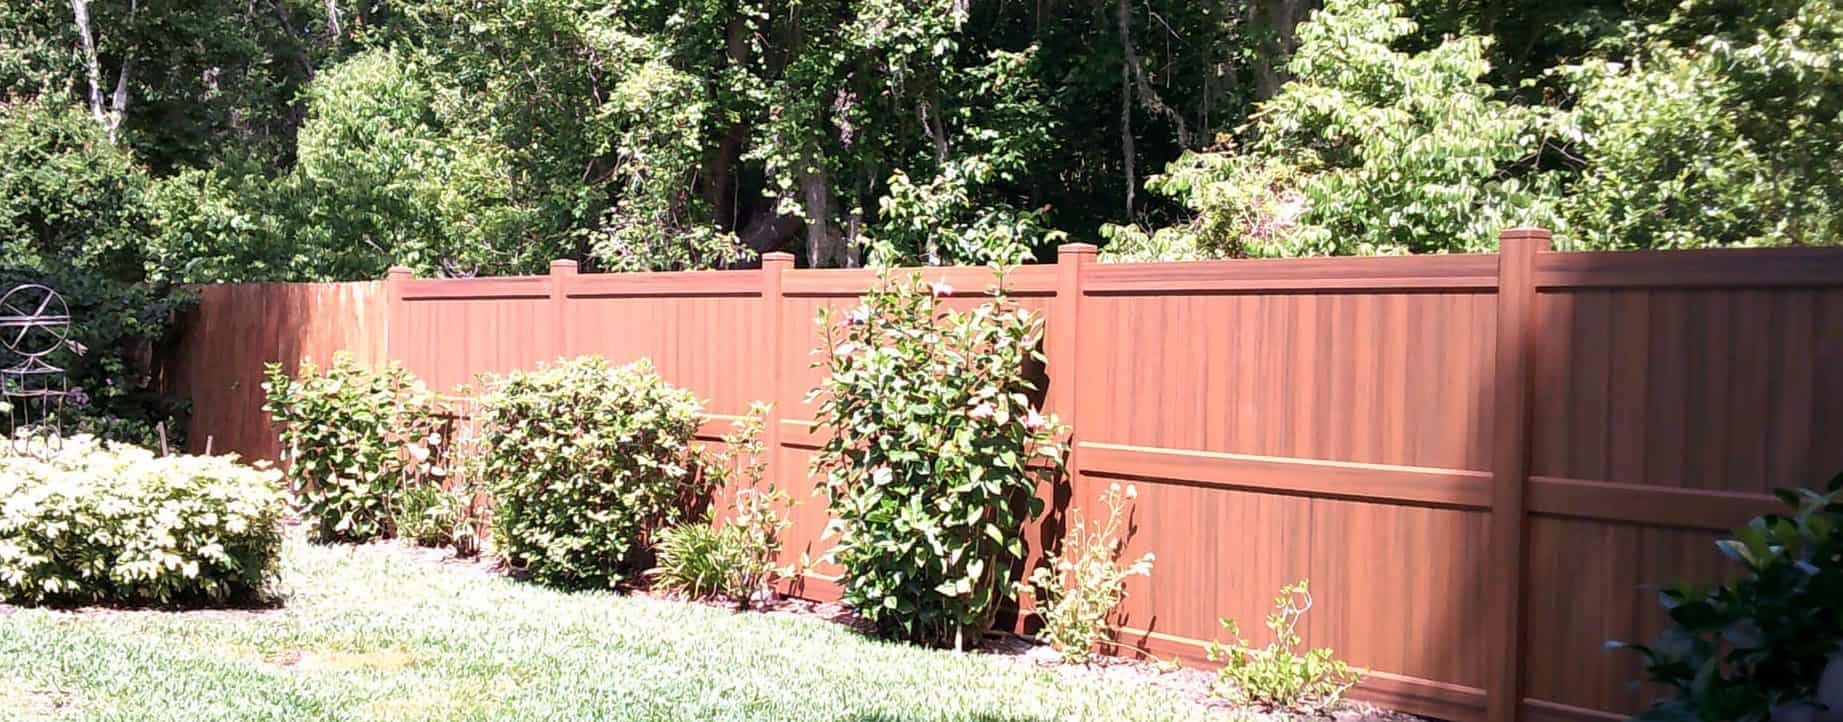 Sunny vinyl fence in backyard